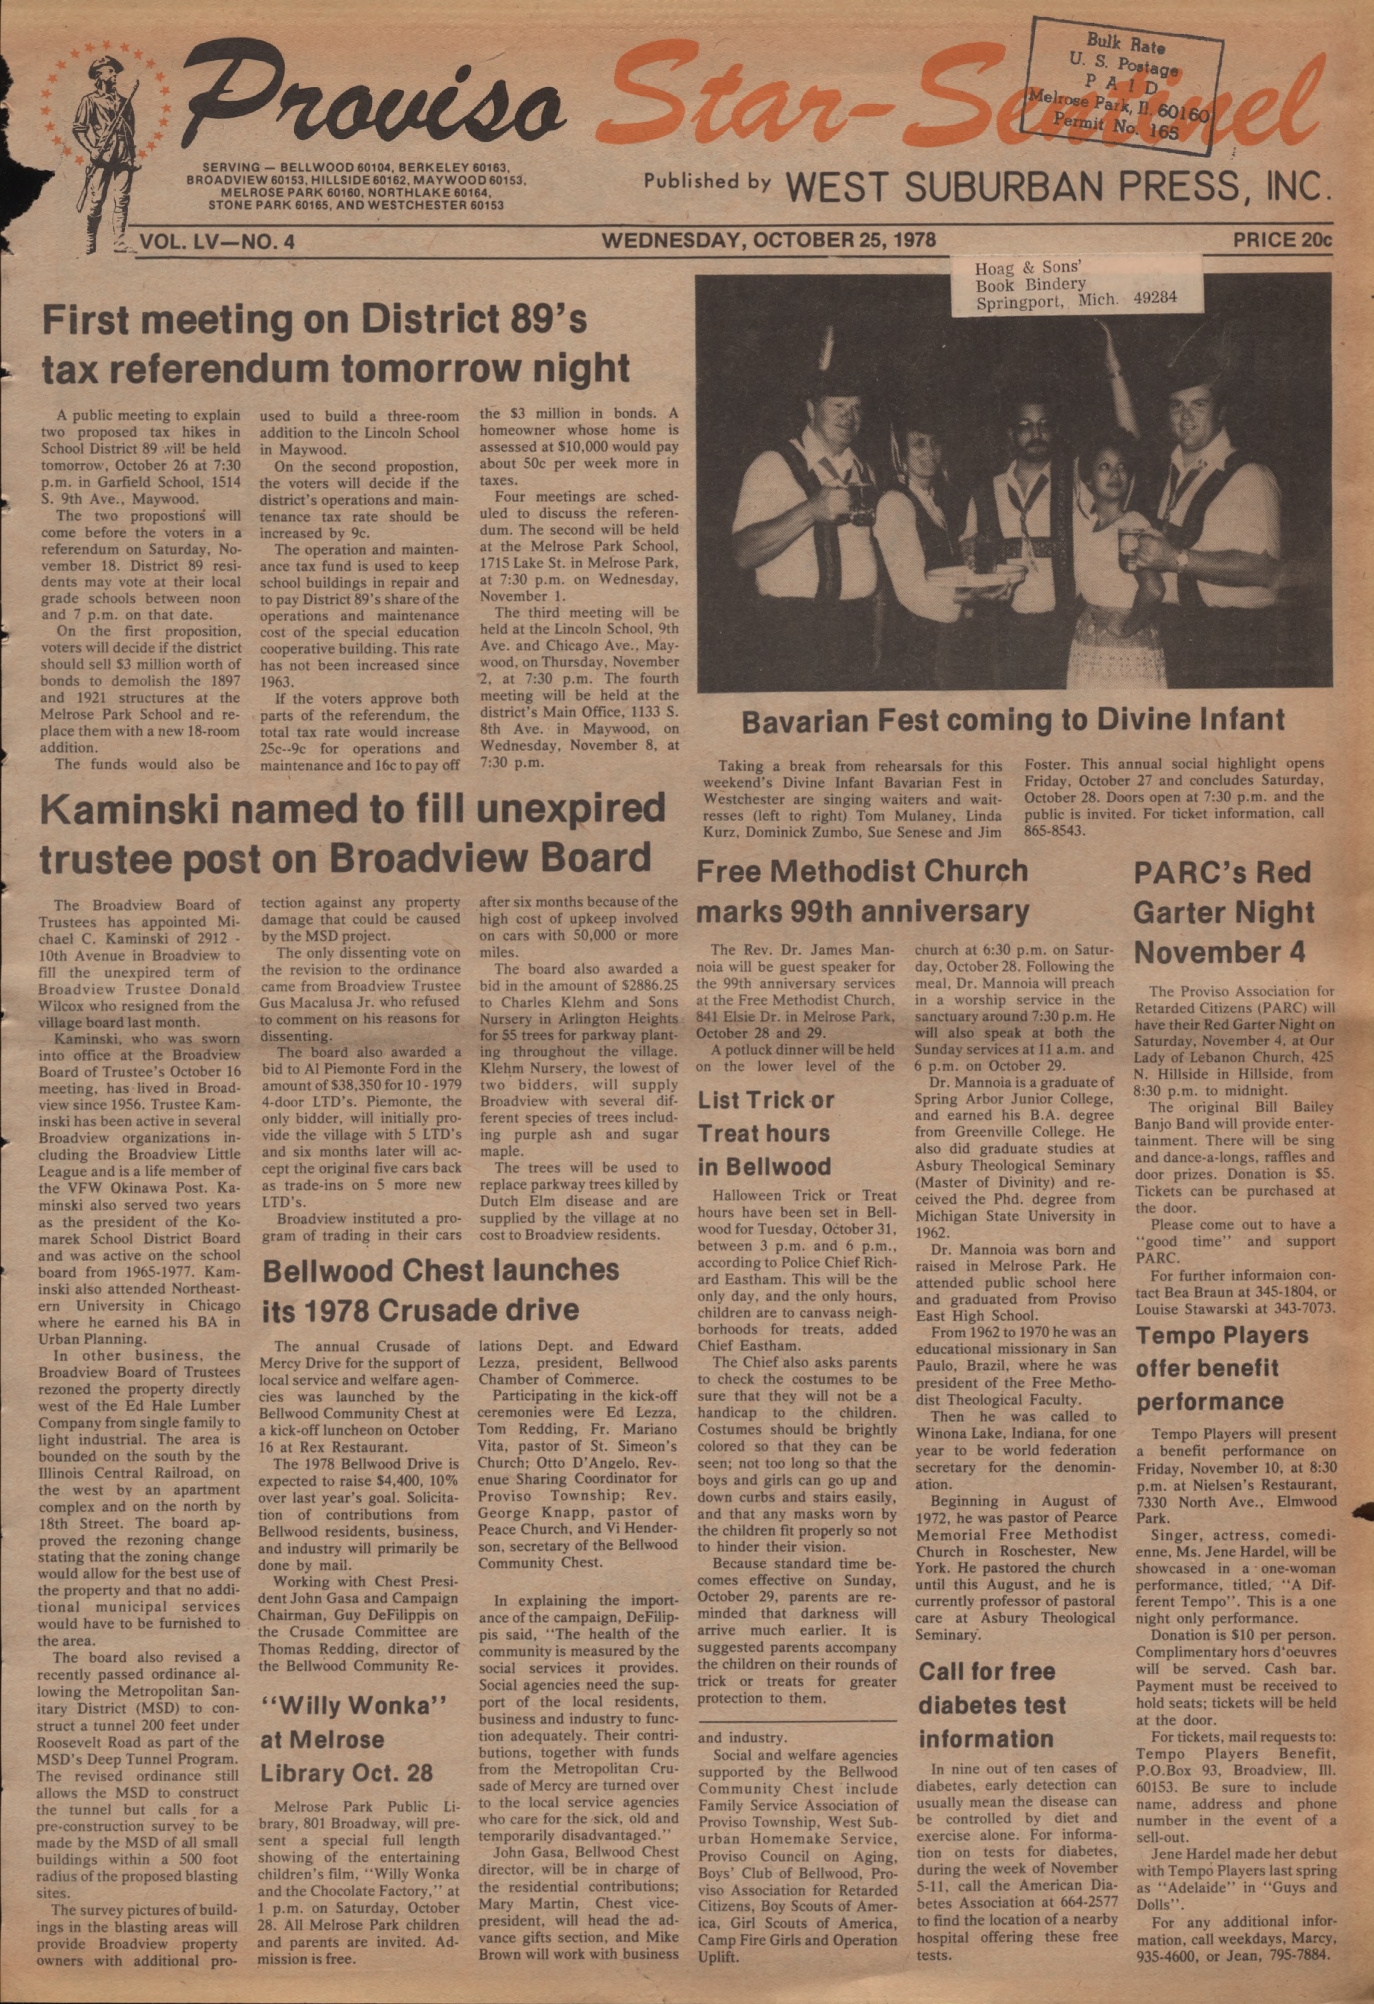 Proviso Star-Sentinel – 19781025